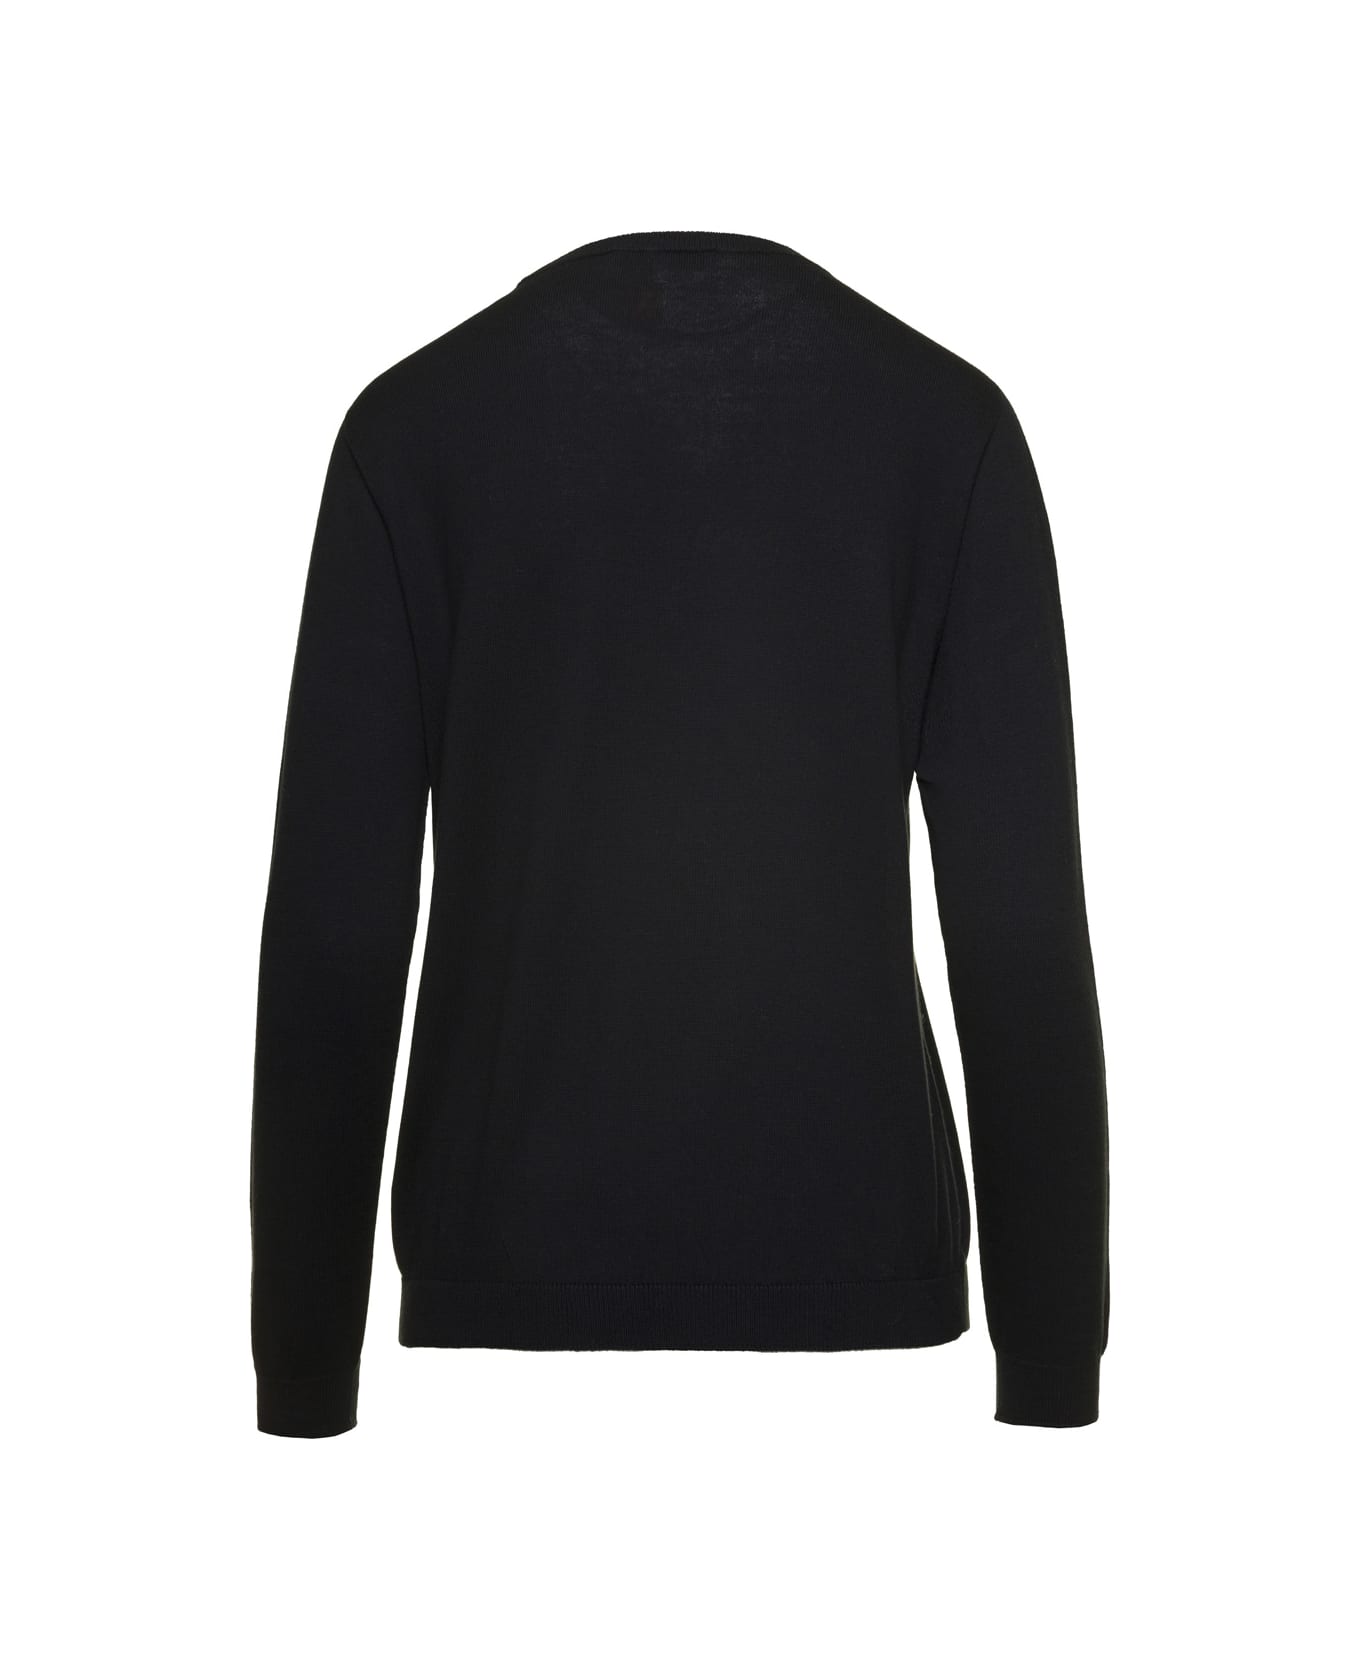 Antonelli Black Crew Neck Sweater In Cashmere Blend Woman - Black